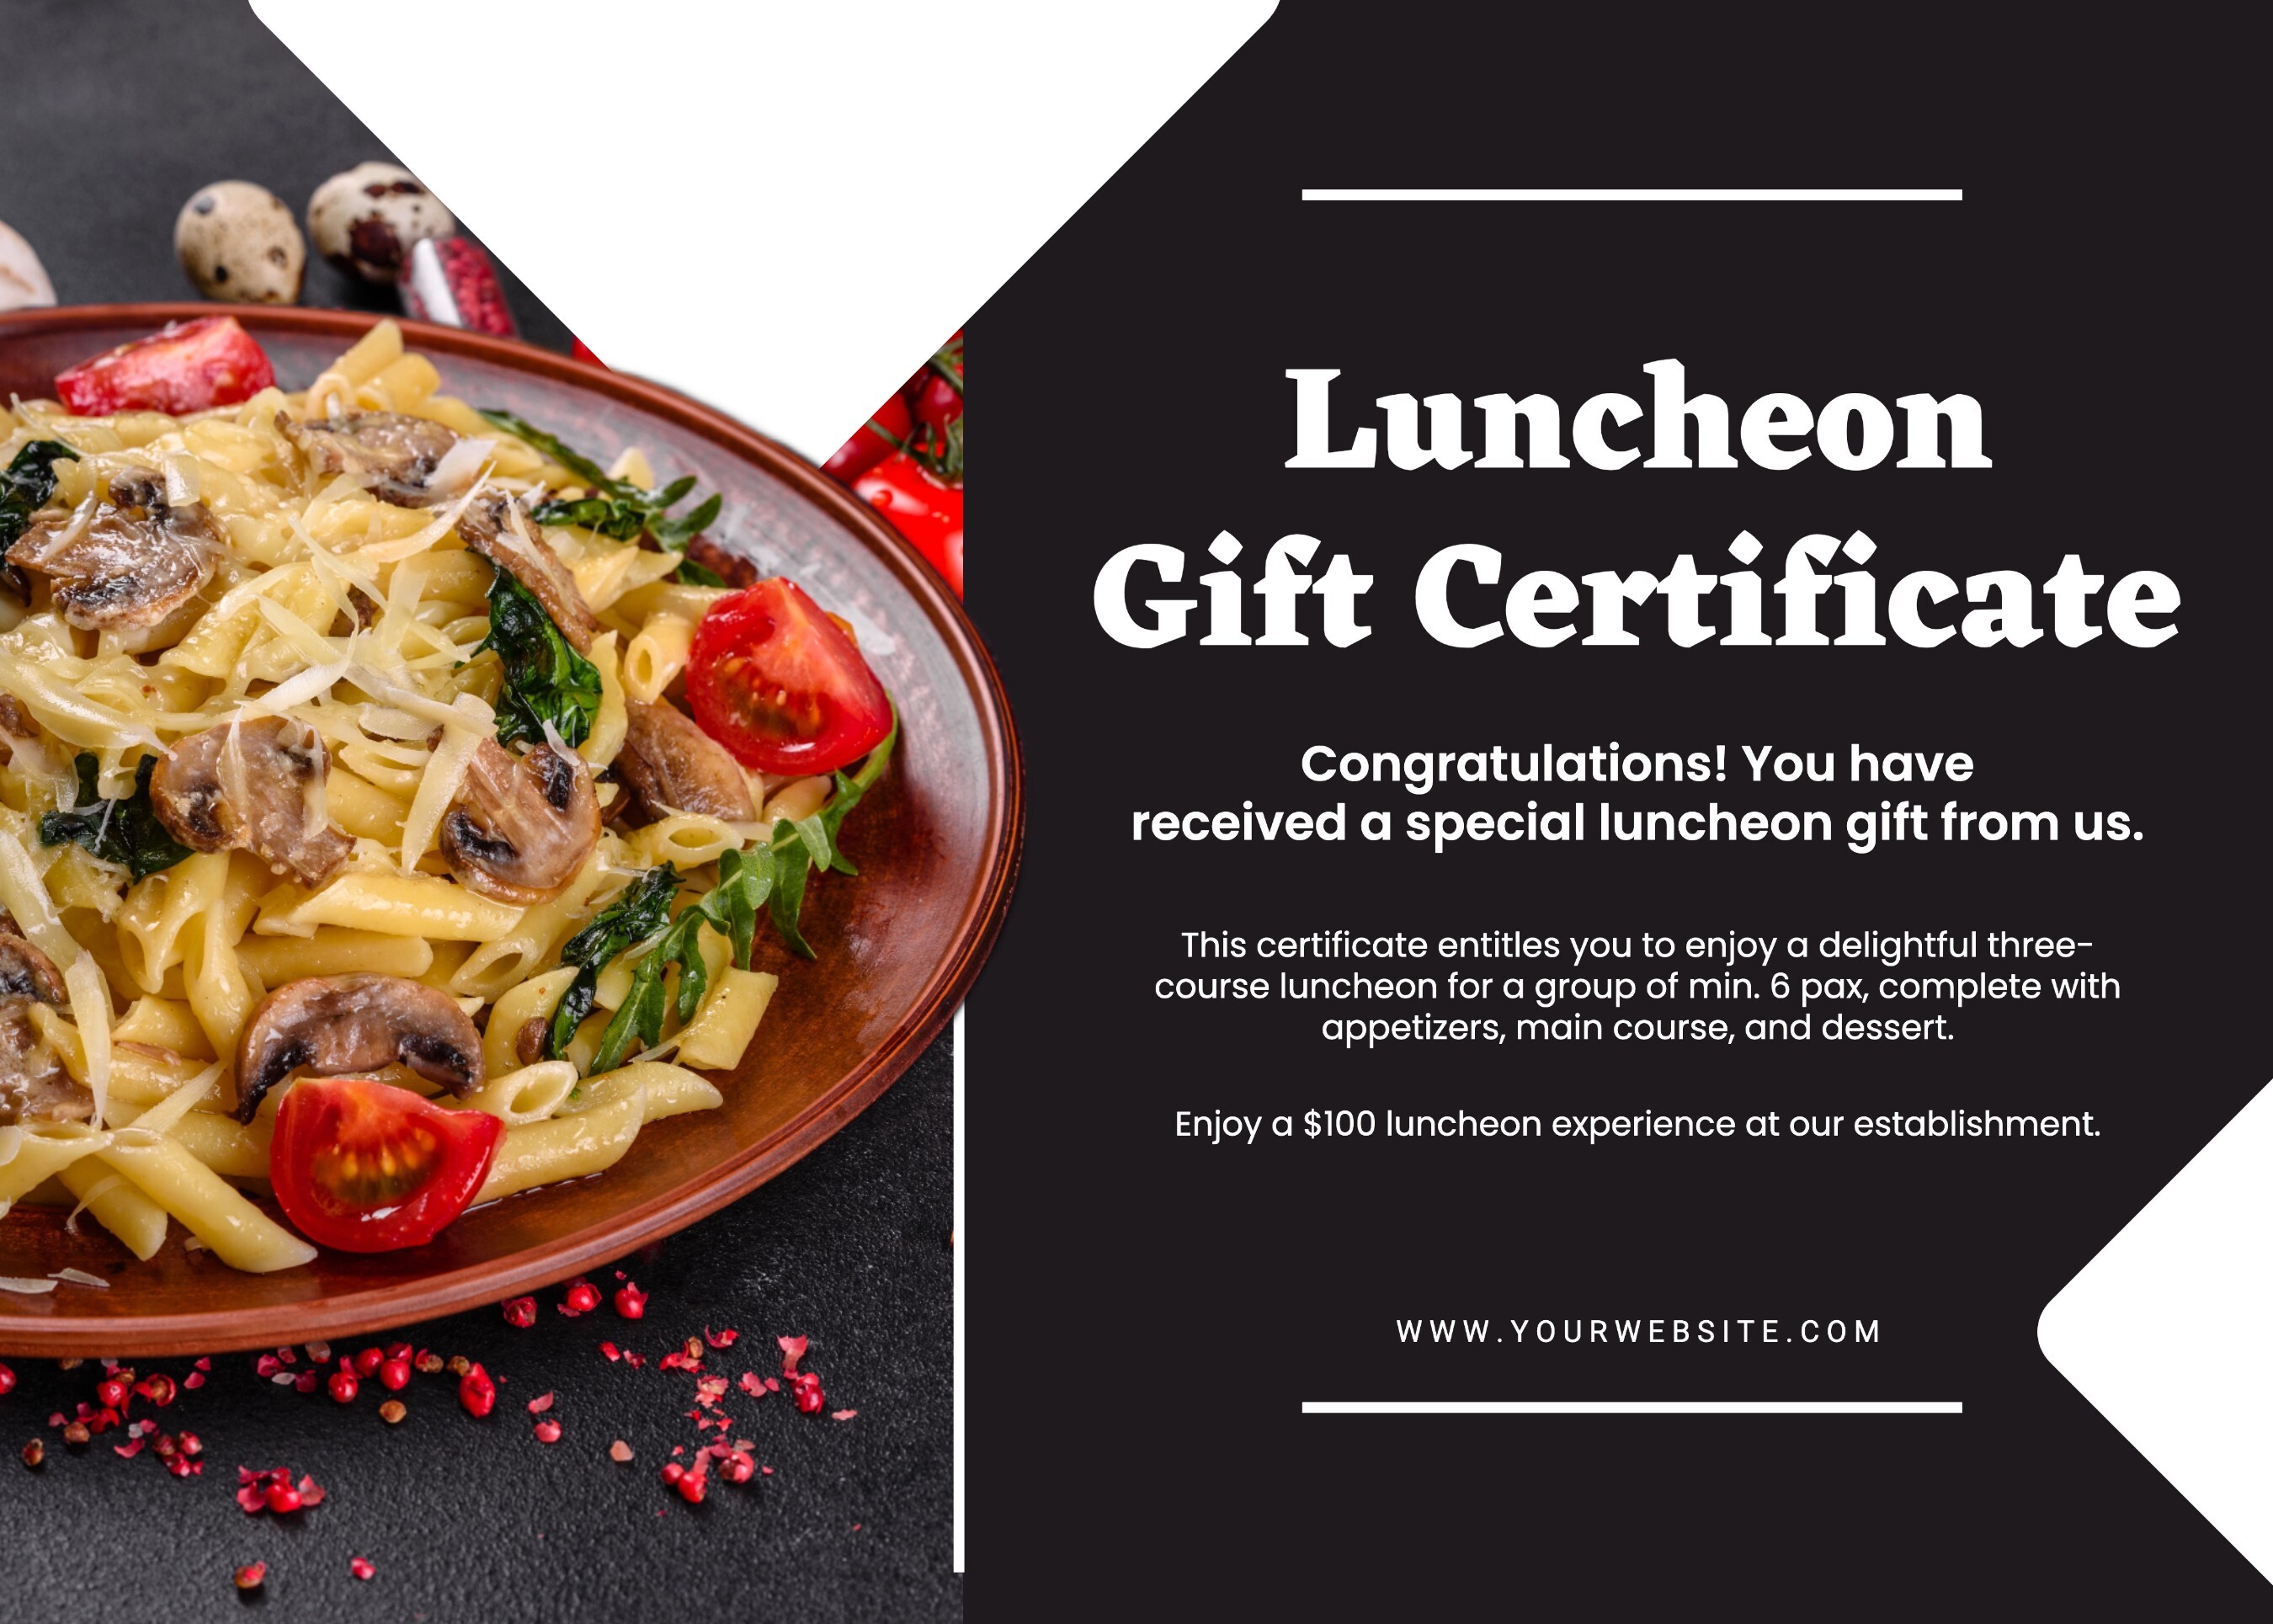 Gift Certificate Luncheon